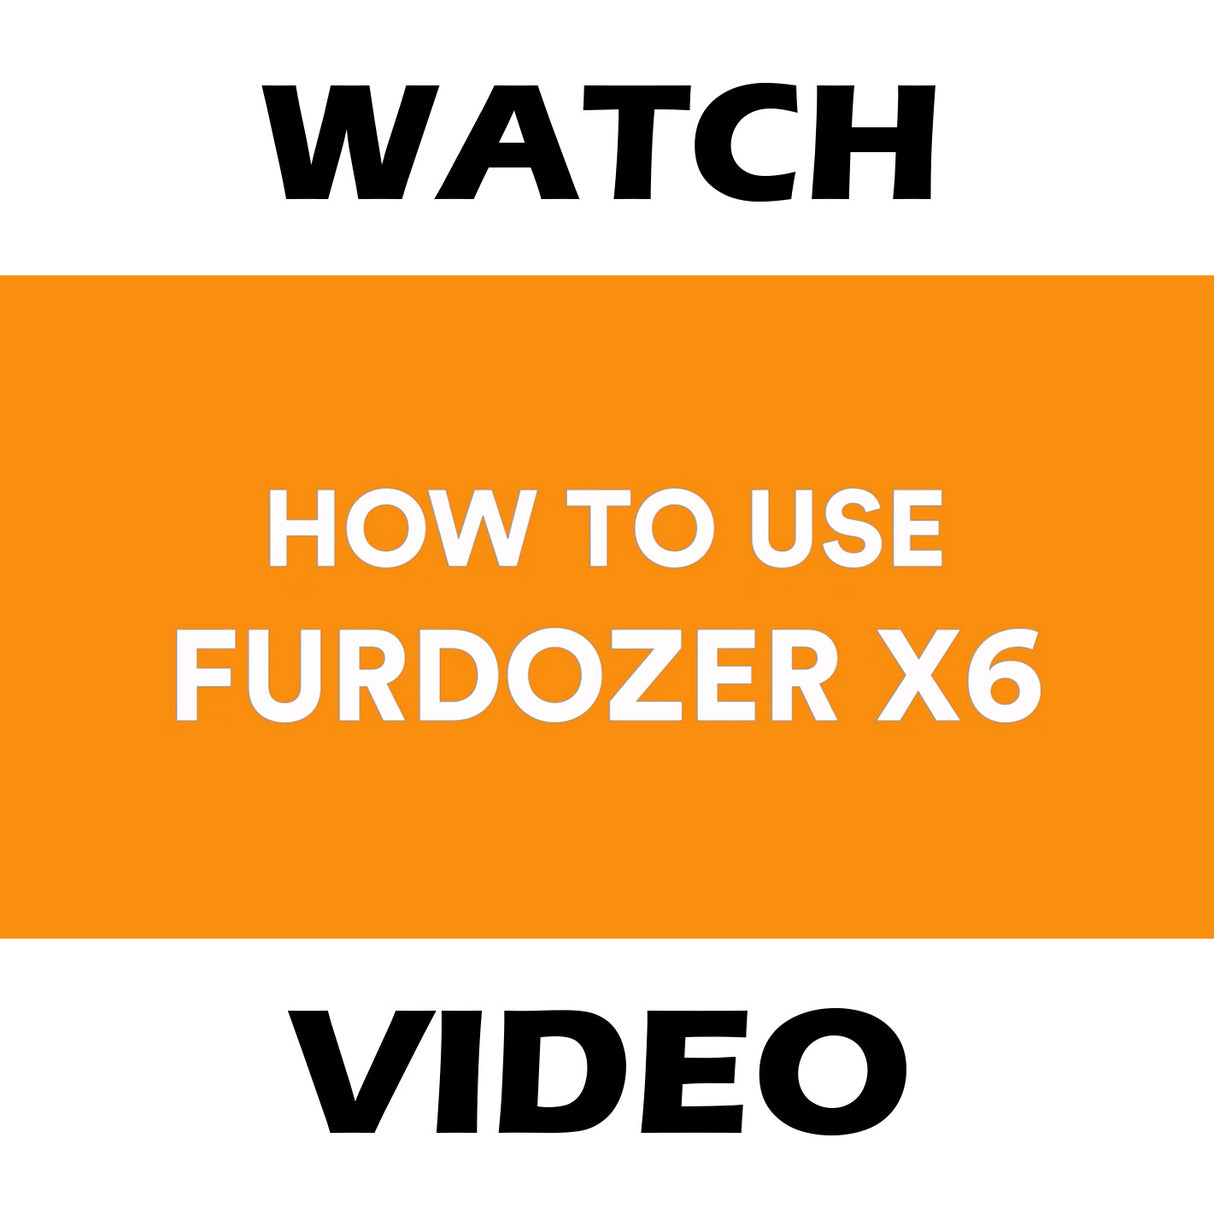 Video explaining how to use the FurDozer X6